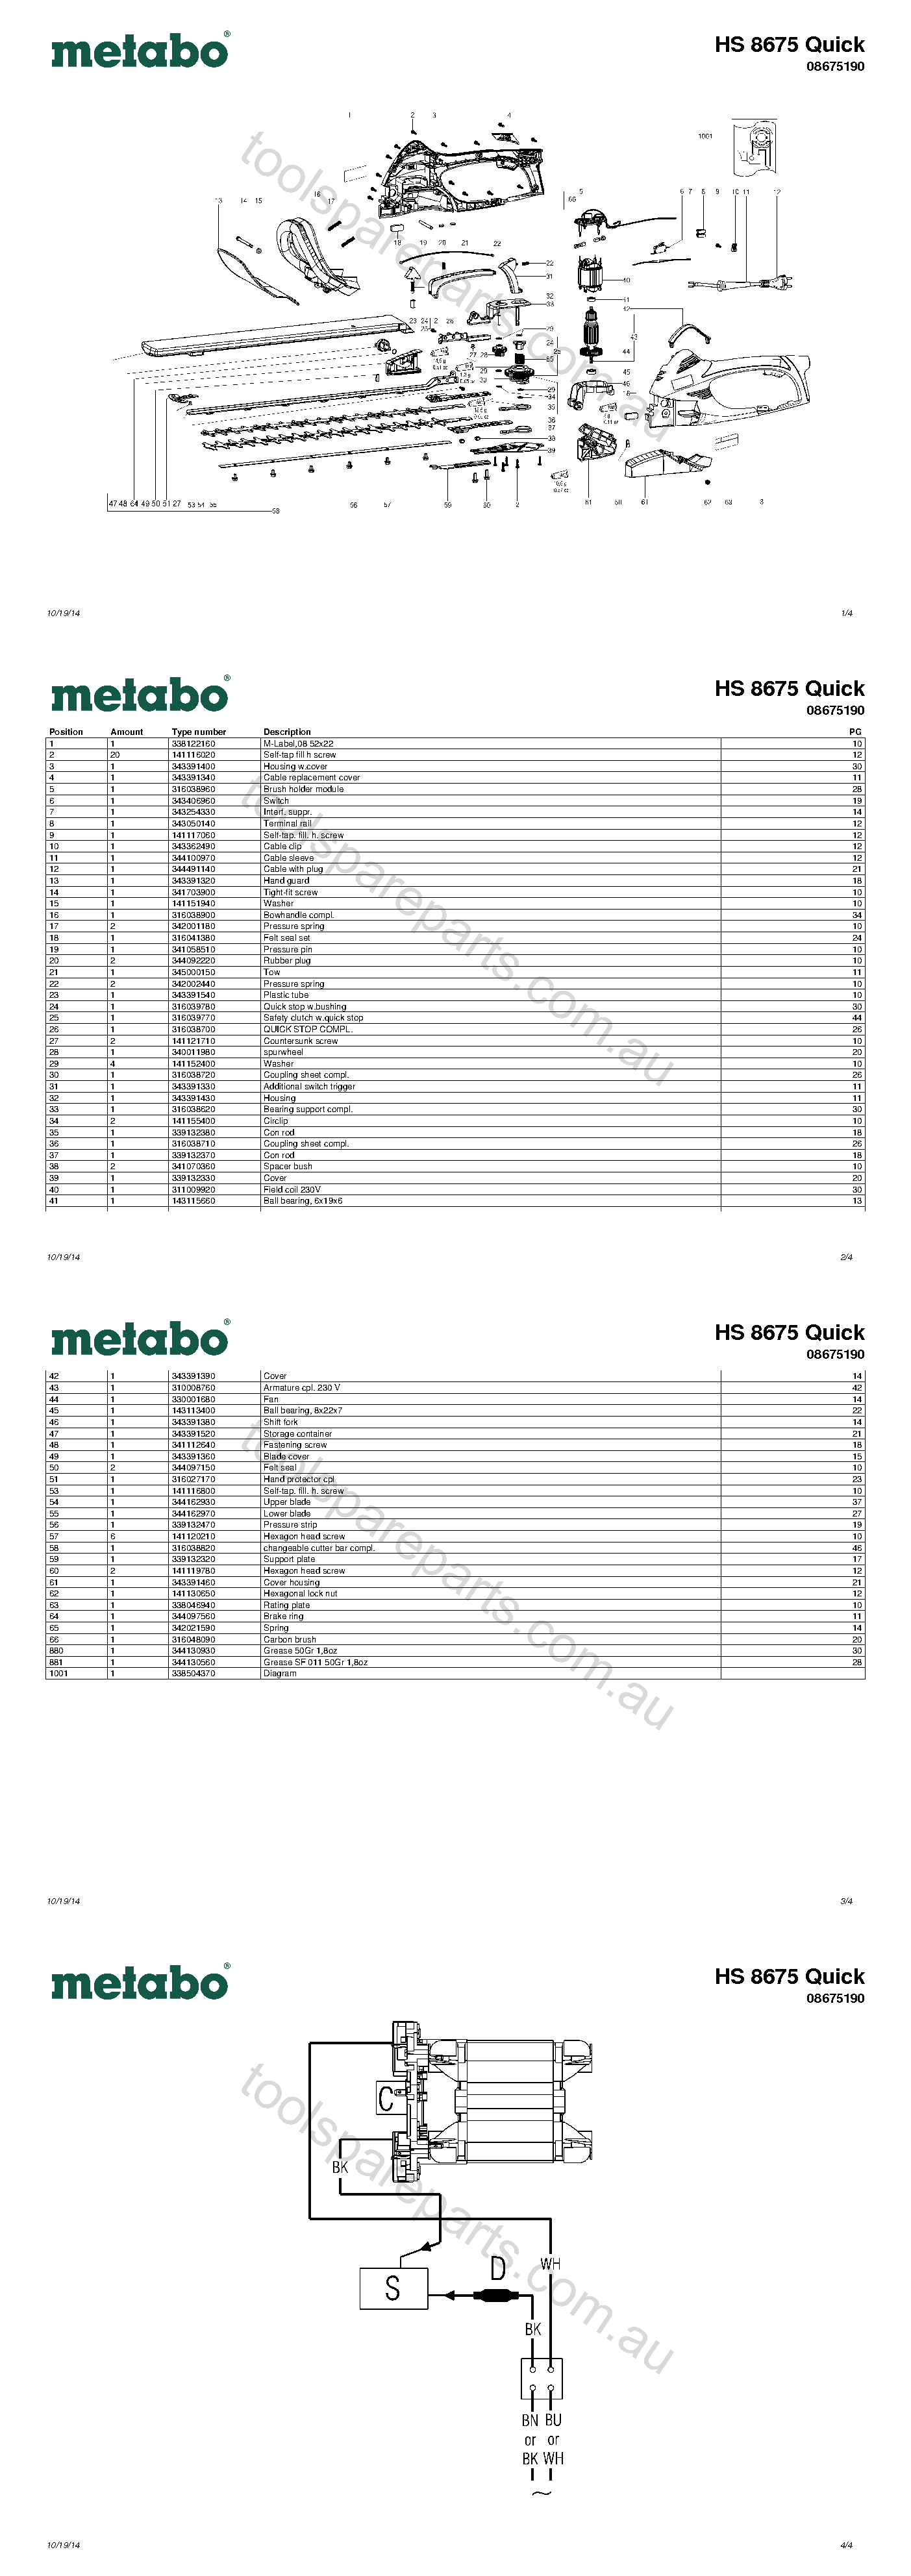 Metabo HS 8675 Quick 08675190  Diagram 1